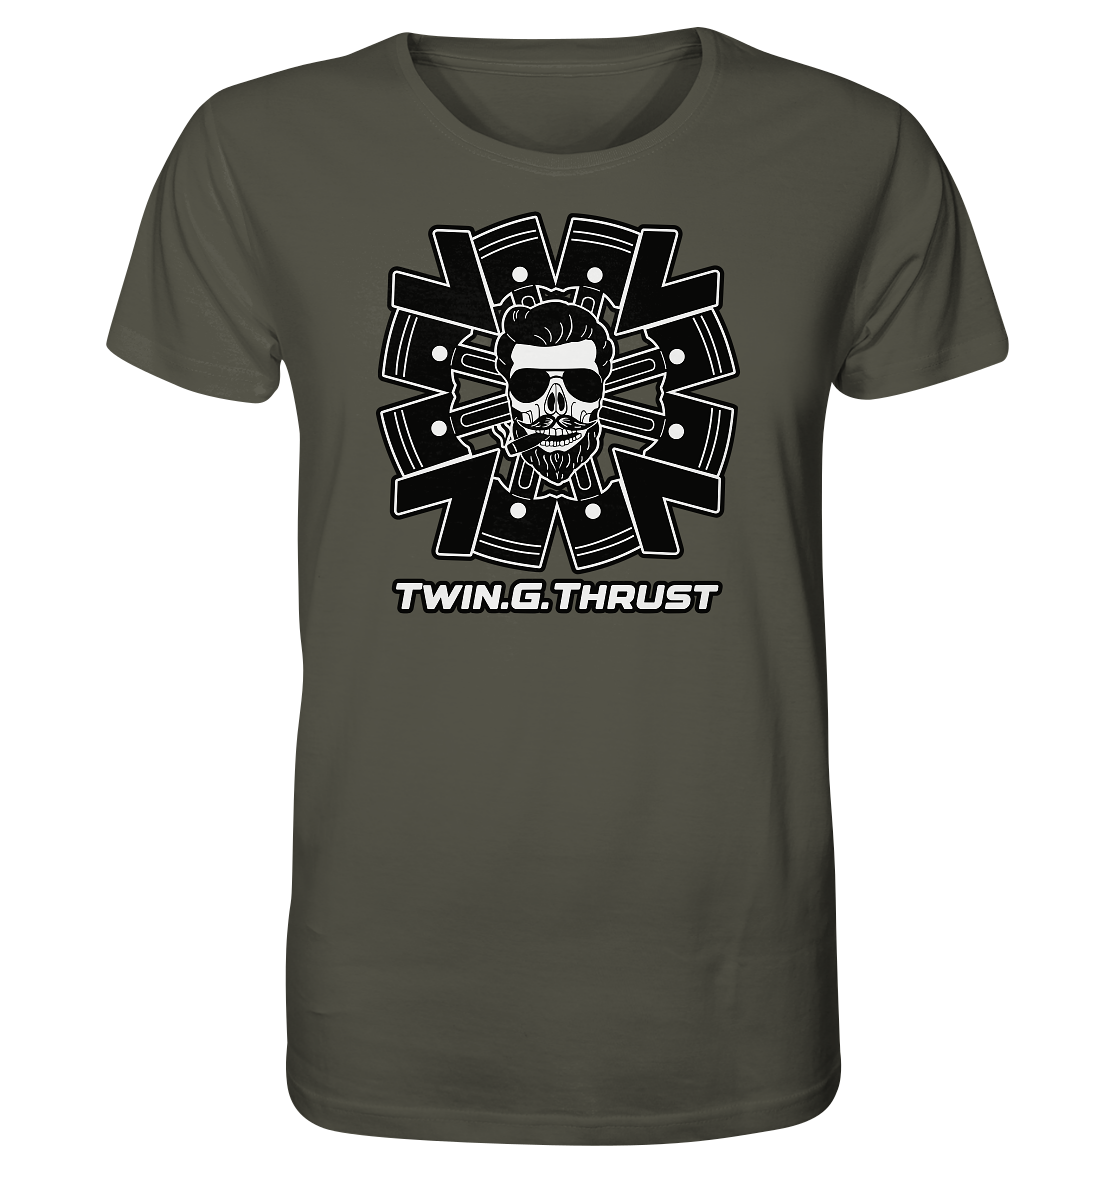 Twin.G.Thrust Logo - Organic Shirt